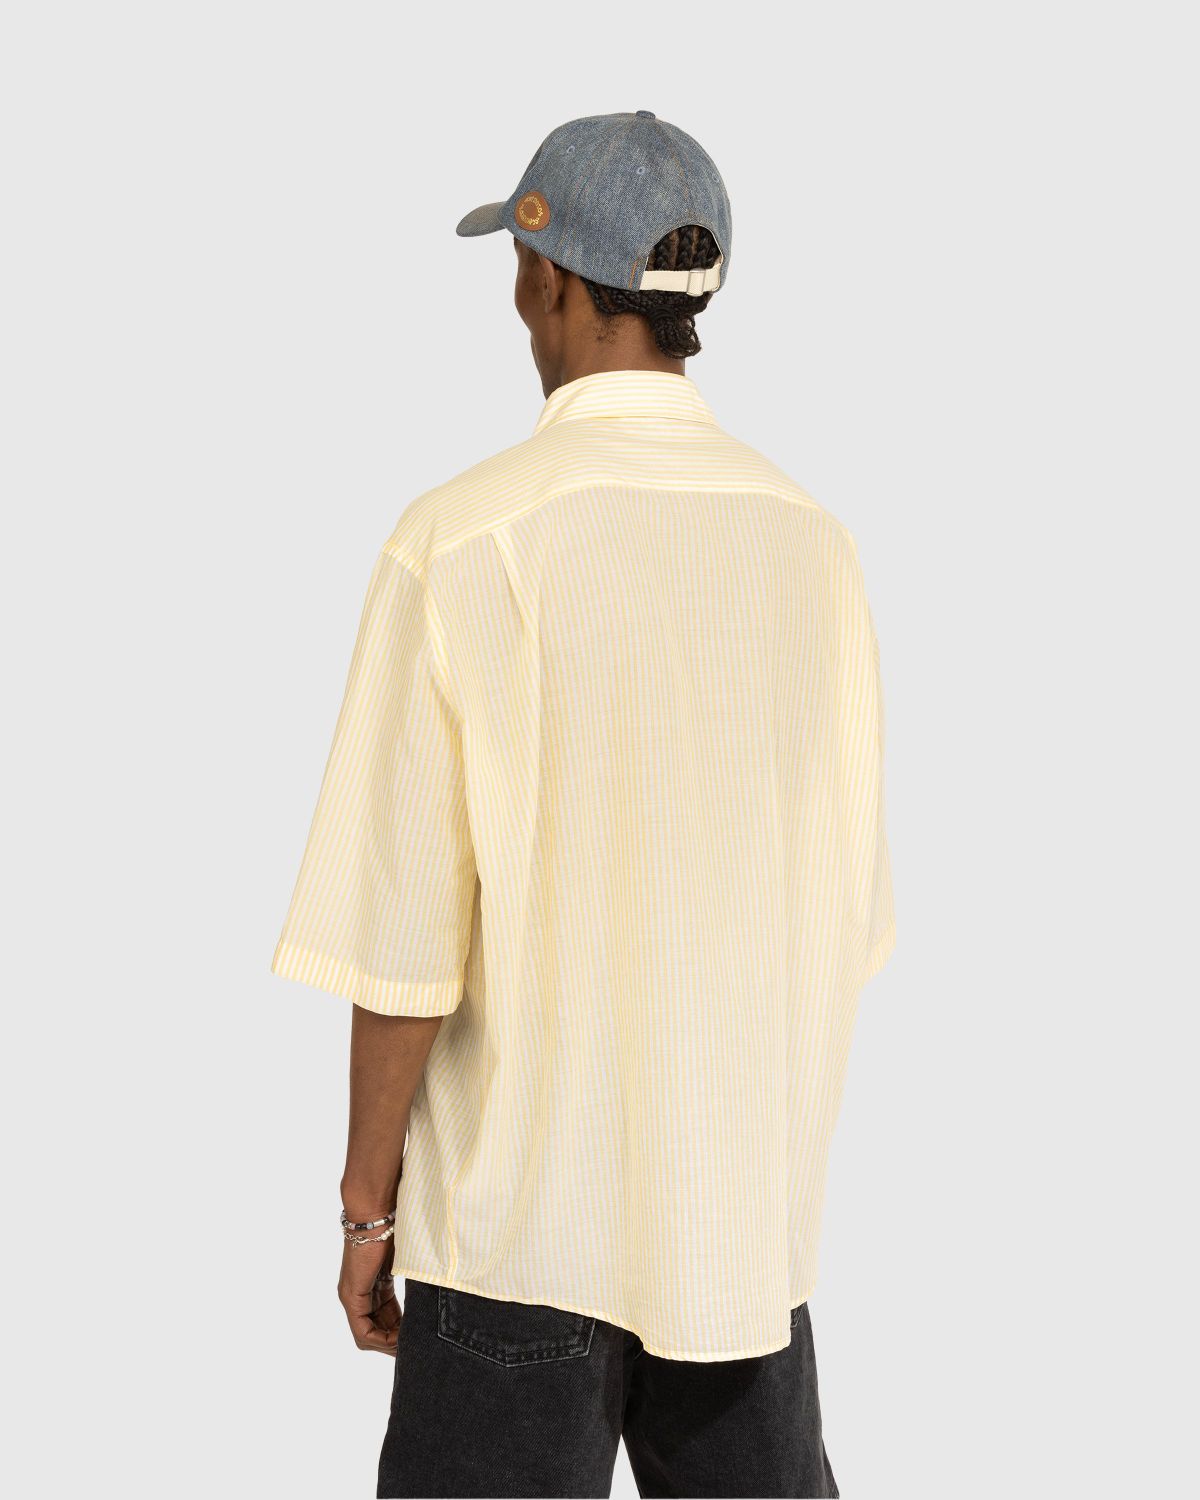 Acne Studios – Short Sleeve Button-Up Shirt Yellow - Shirts - Yellow - Image 3